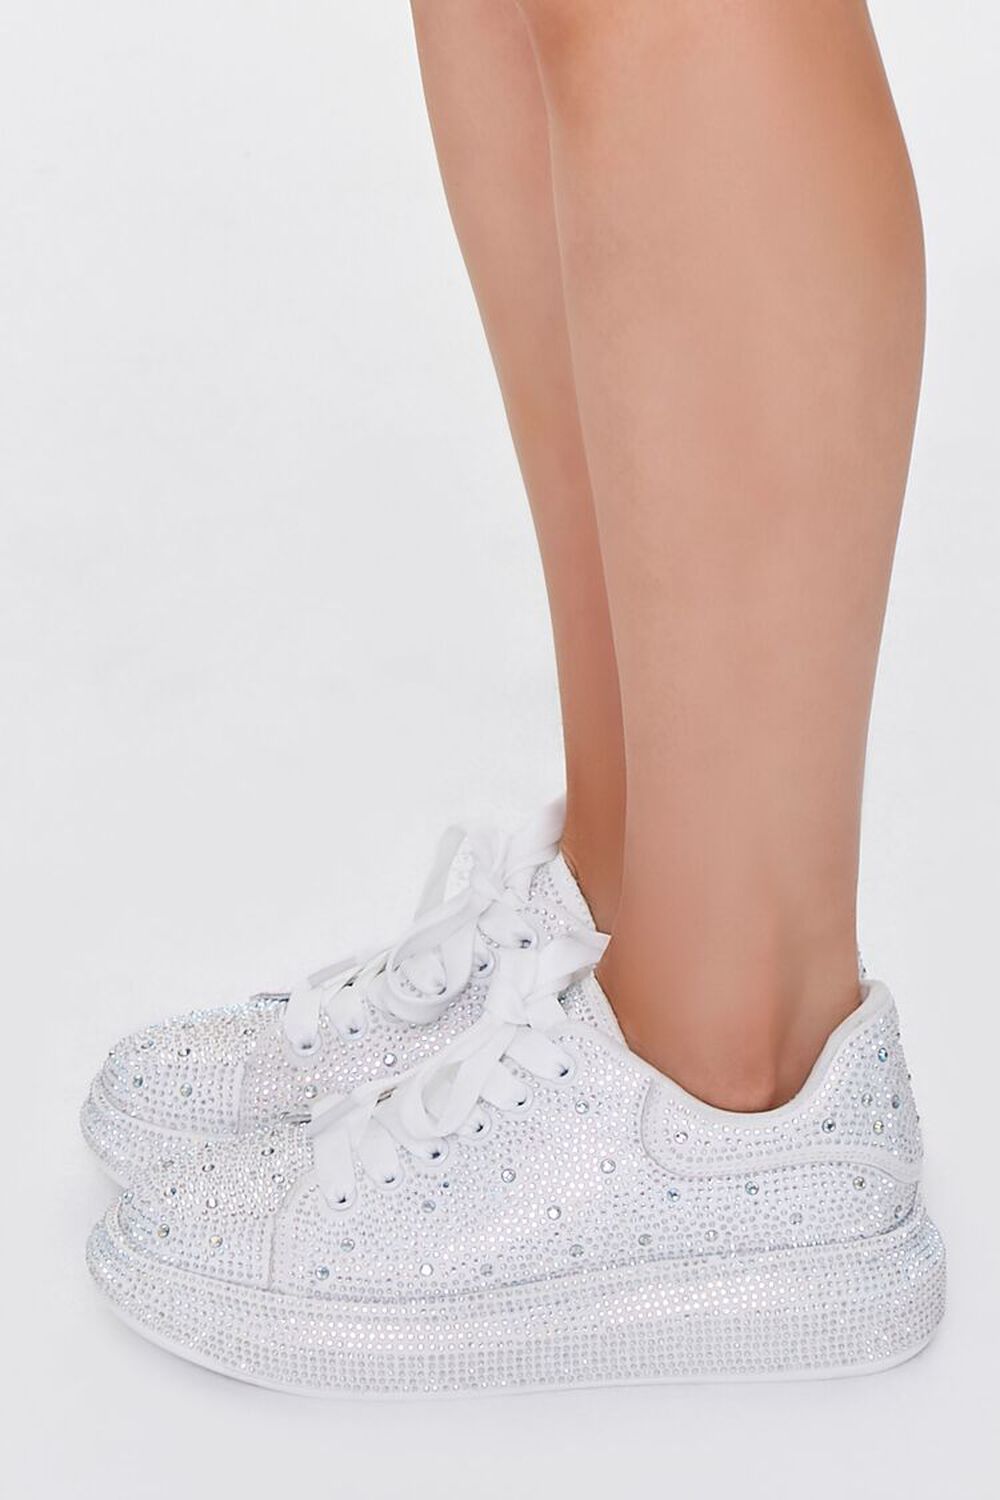 WHITE Rhinestone-Embellished Low-Top Sneakers, image 2